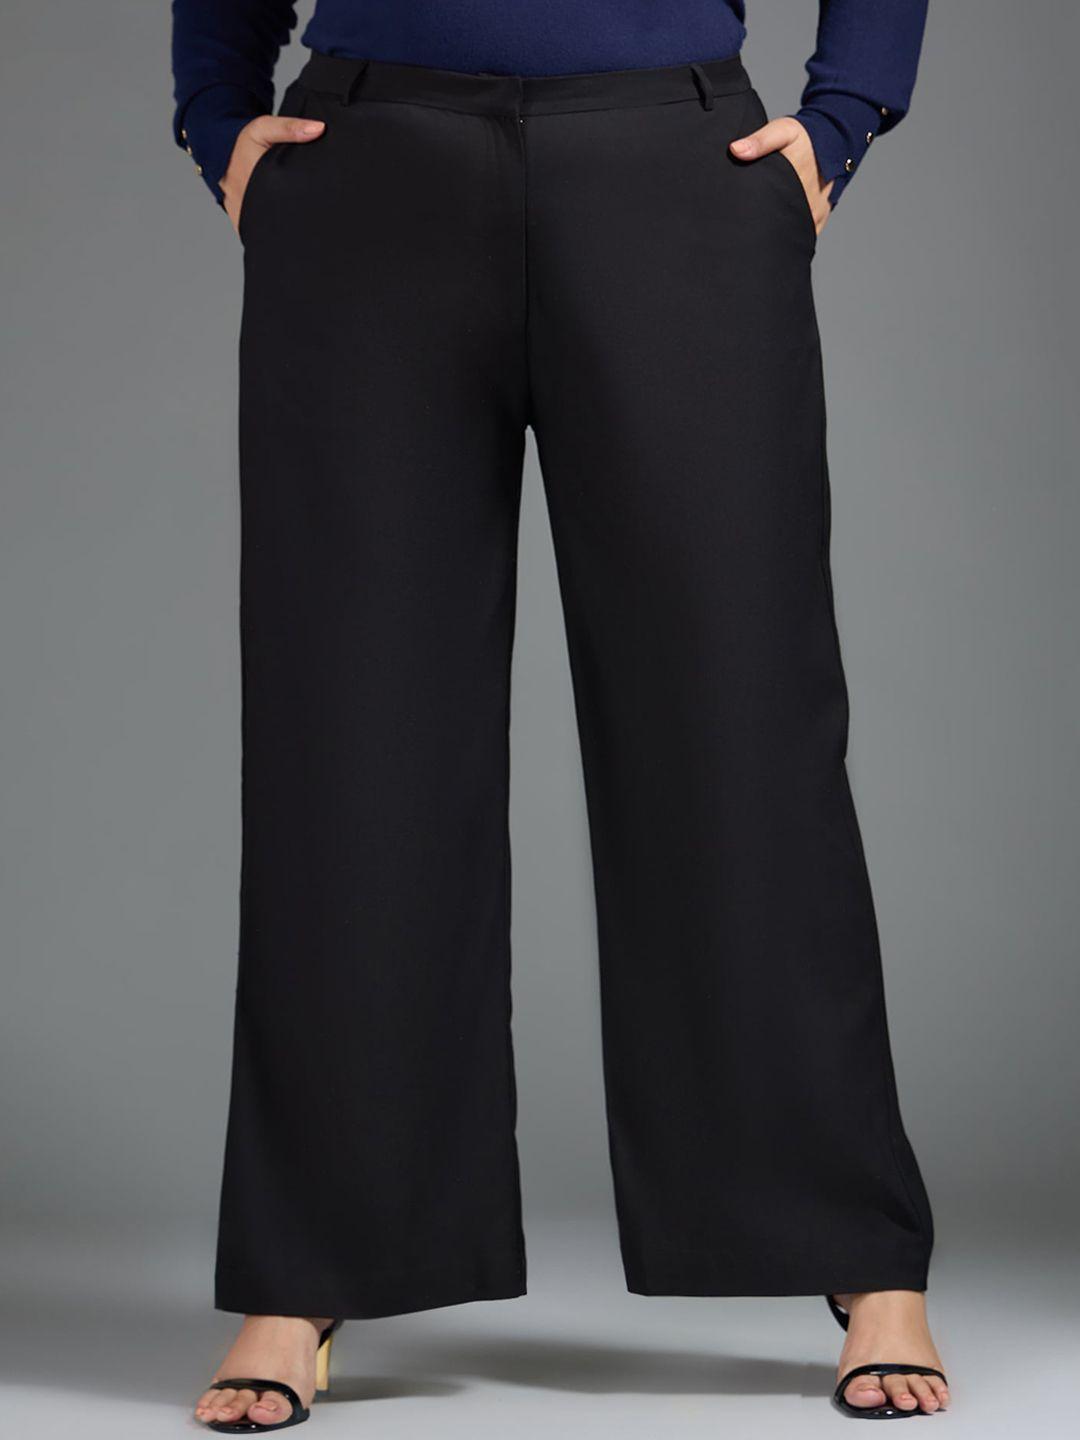 20dresses women black high rise parallel trousers